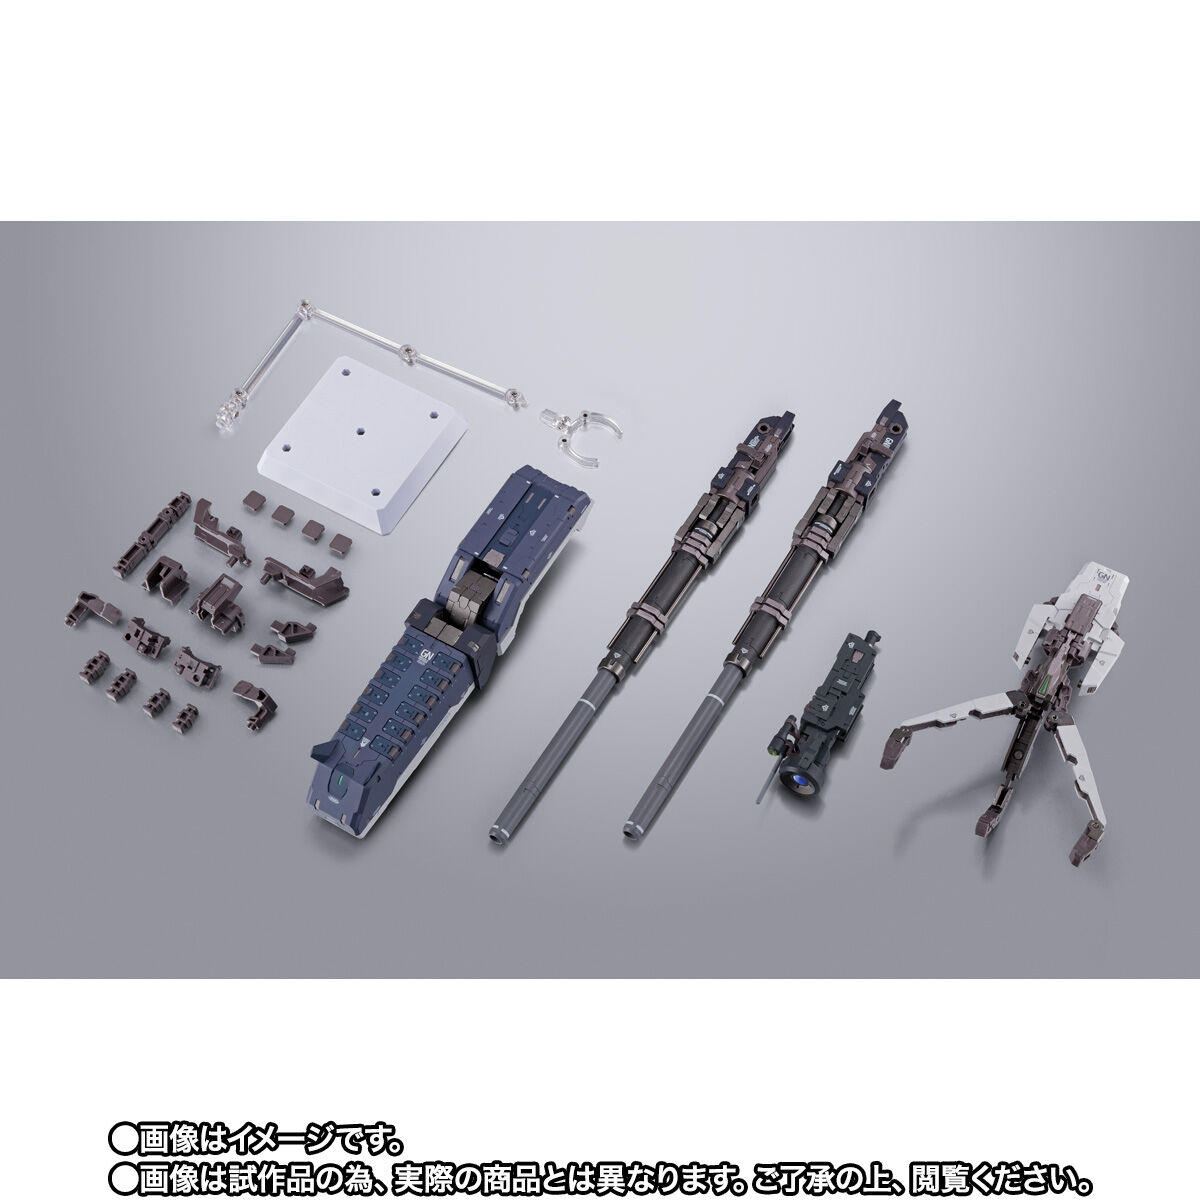 Metal Build GNR-001E GN Arms Type Exia Option set(GNR-001D GN Arms Type Dynames)